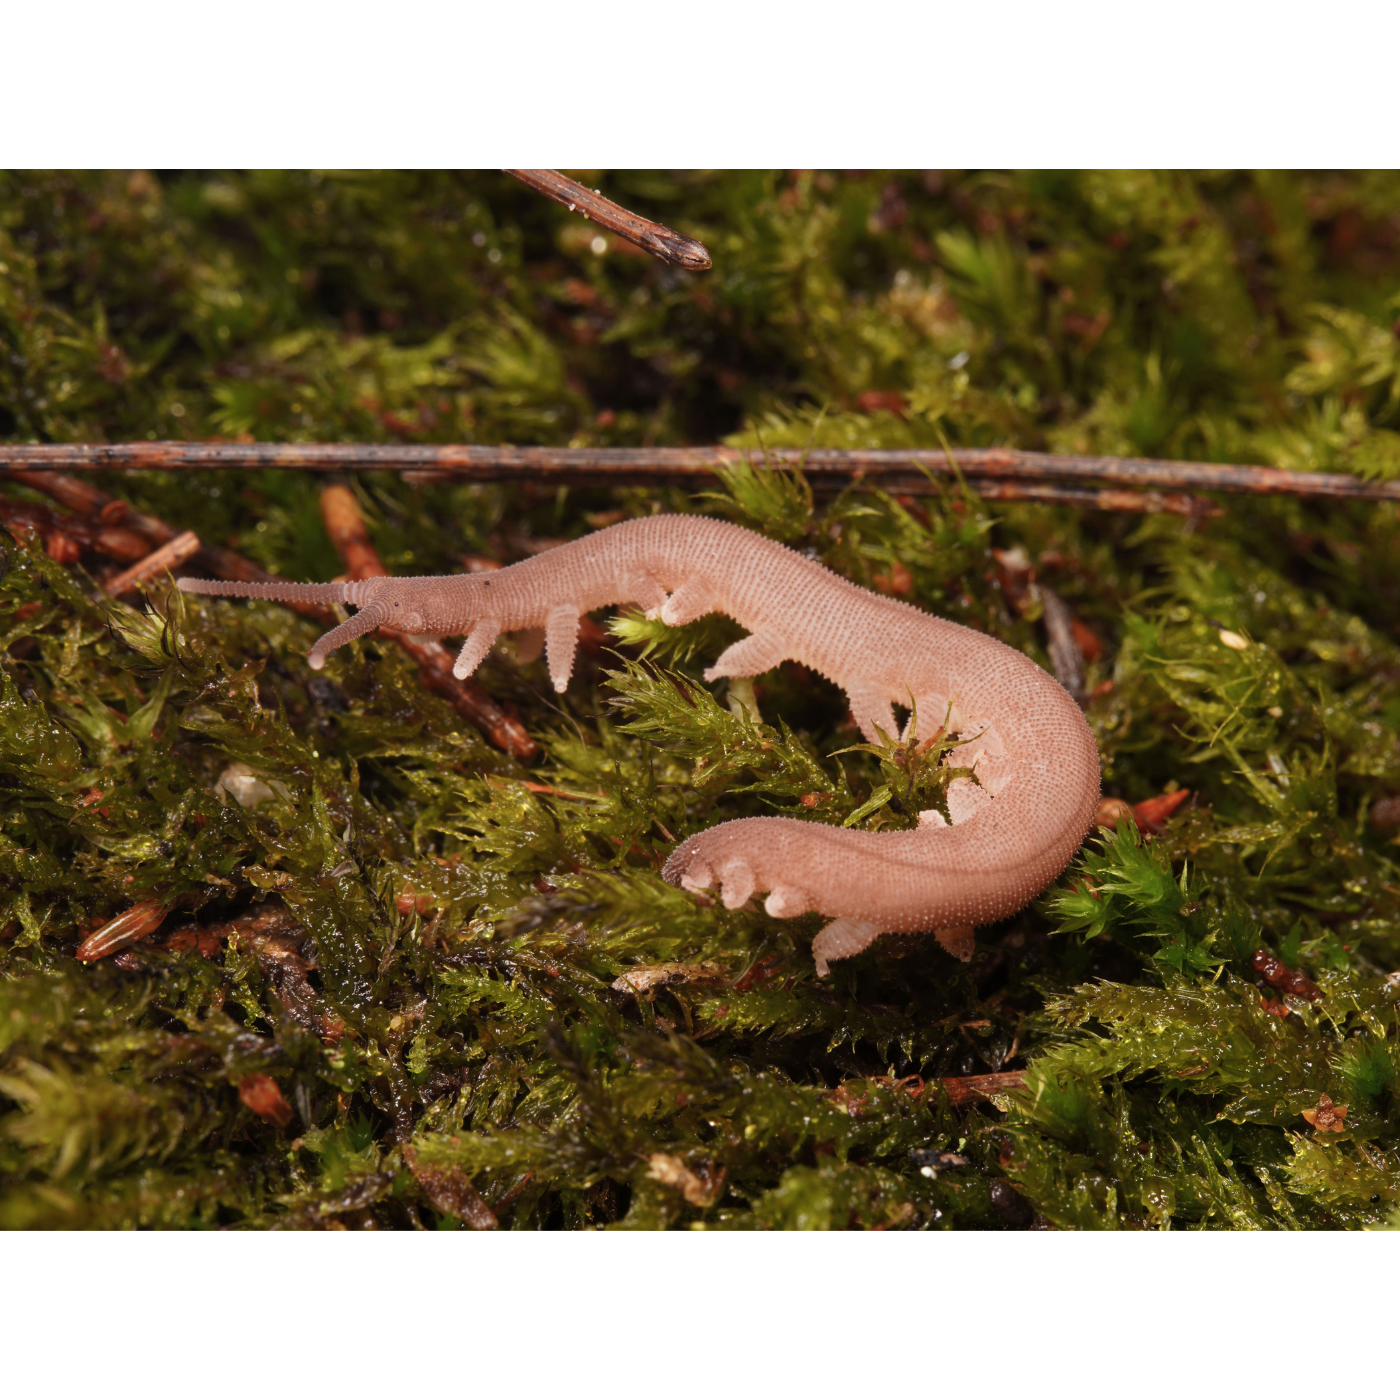 Bruno Bell - Tasmanipatus barretti (Giant Velvet Worm)